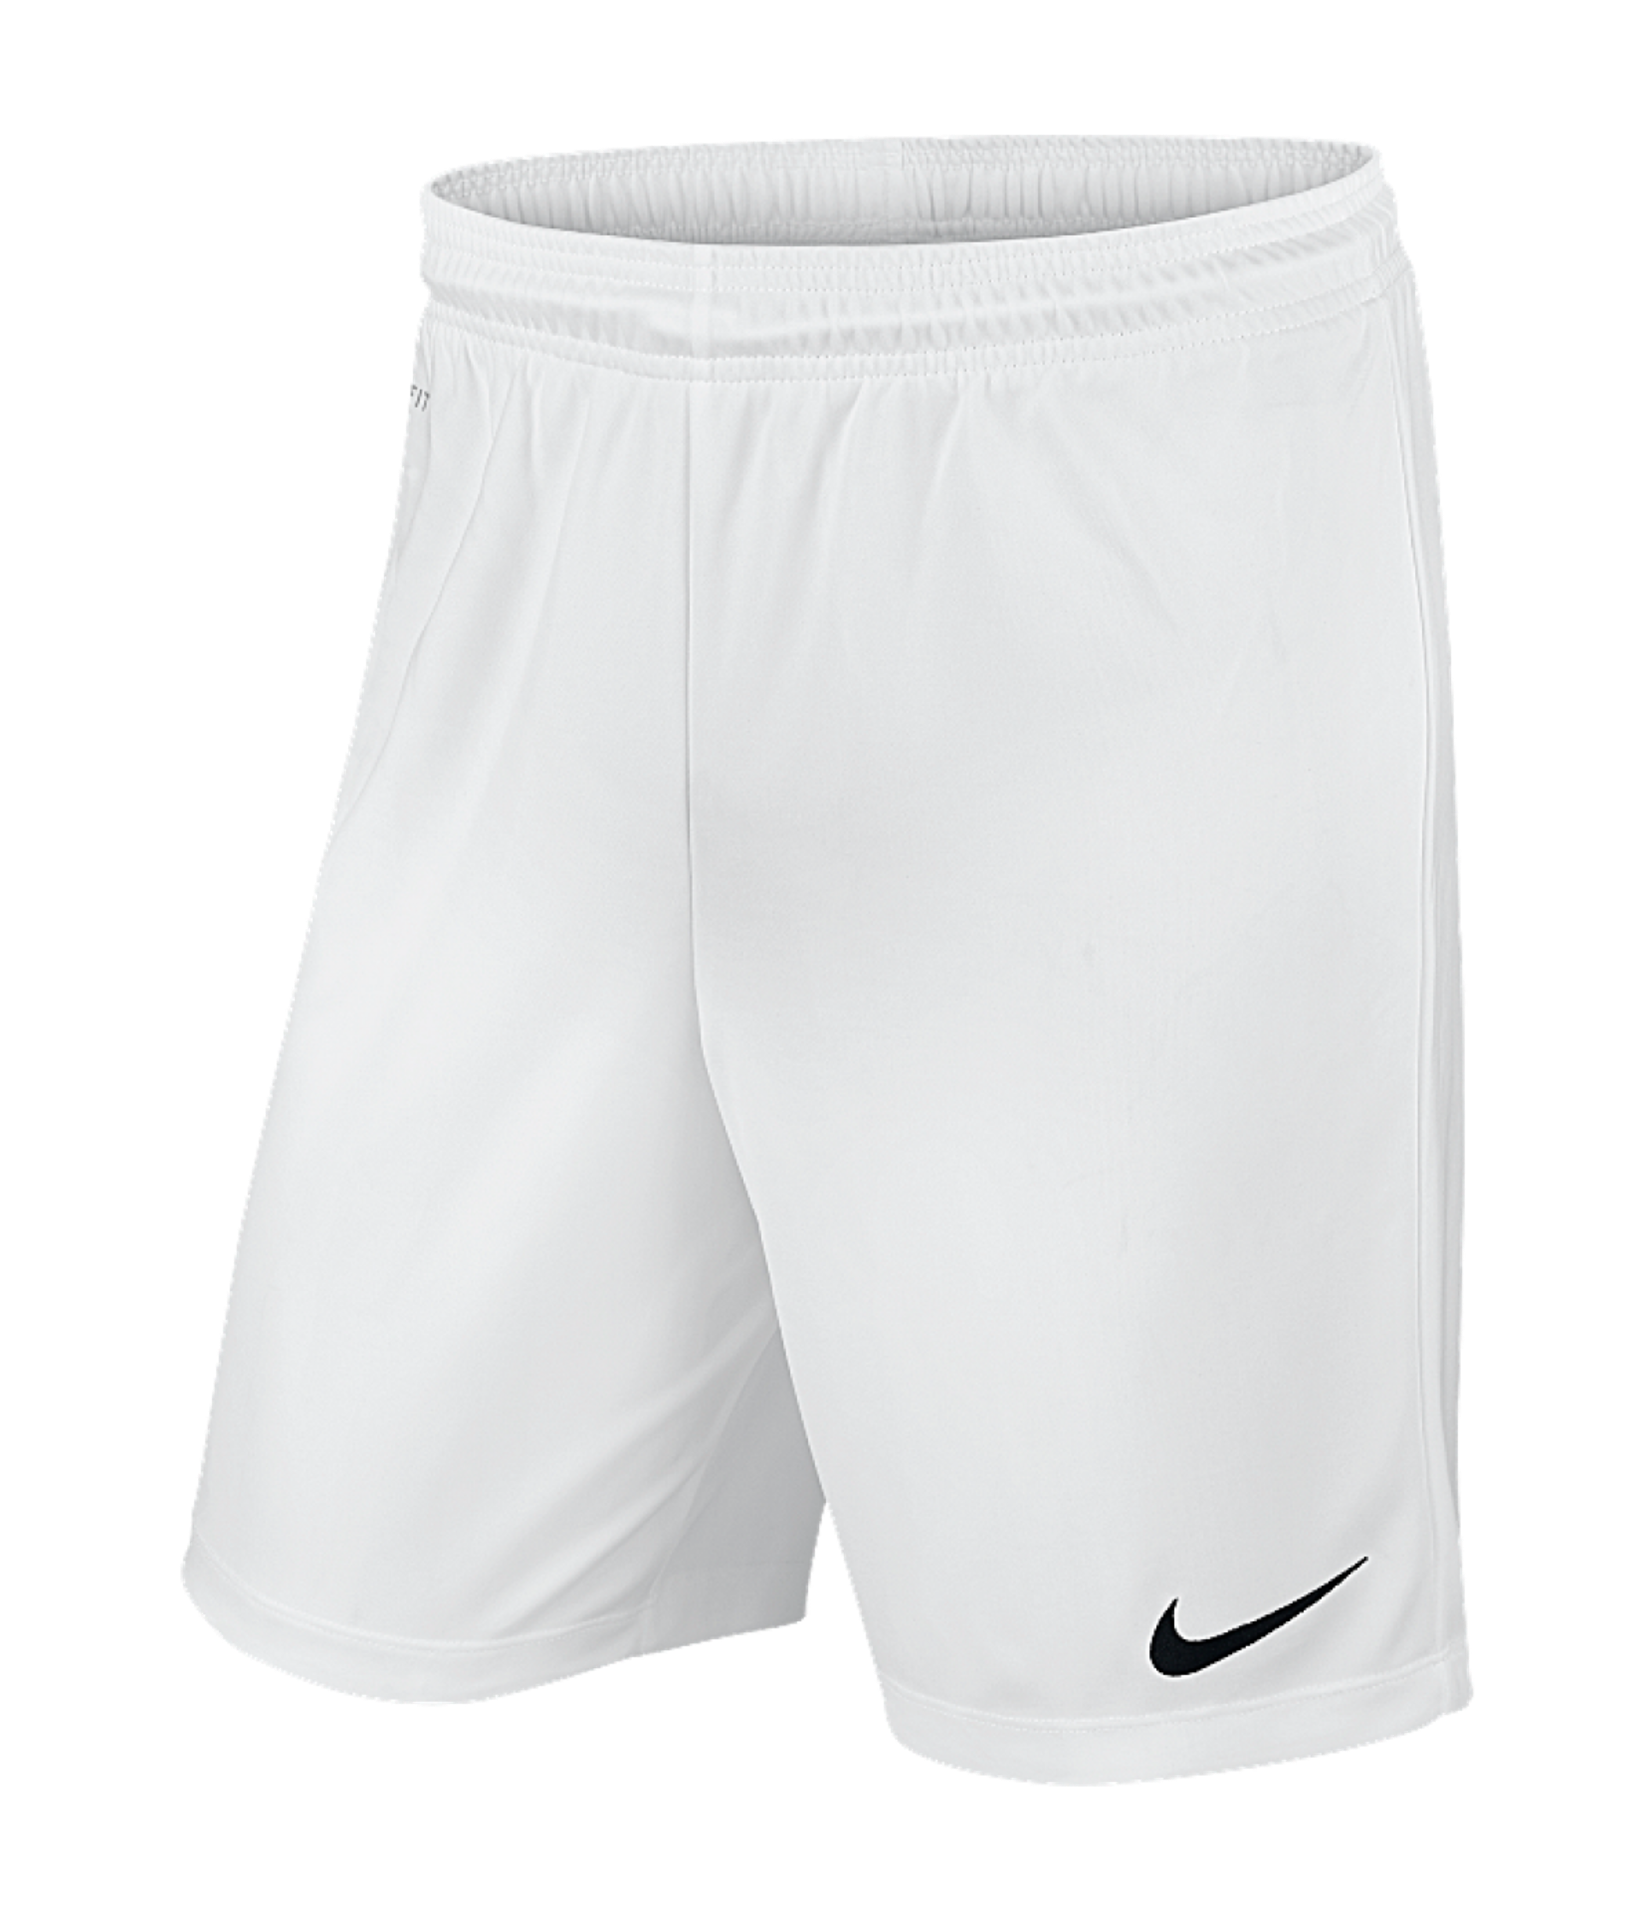 Nike Sports Clothing Joblot Rrp £2,474.77 - Image 4 of 6